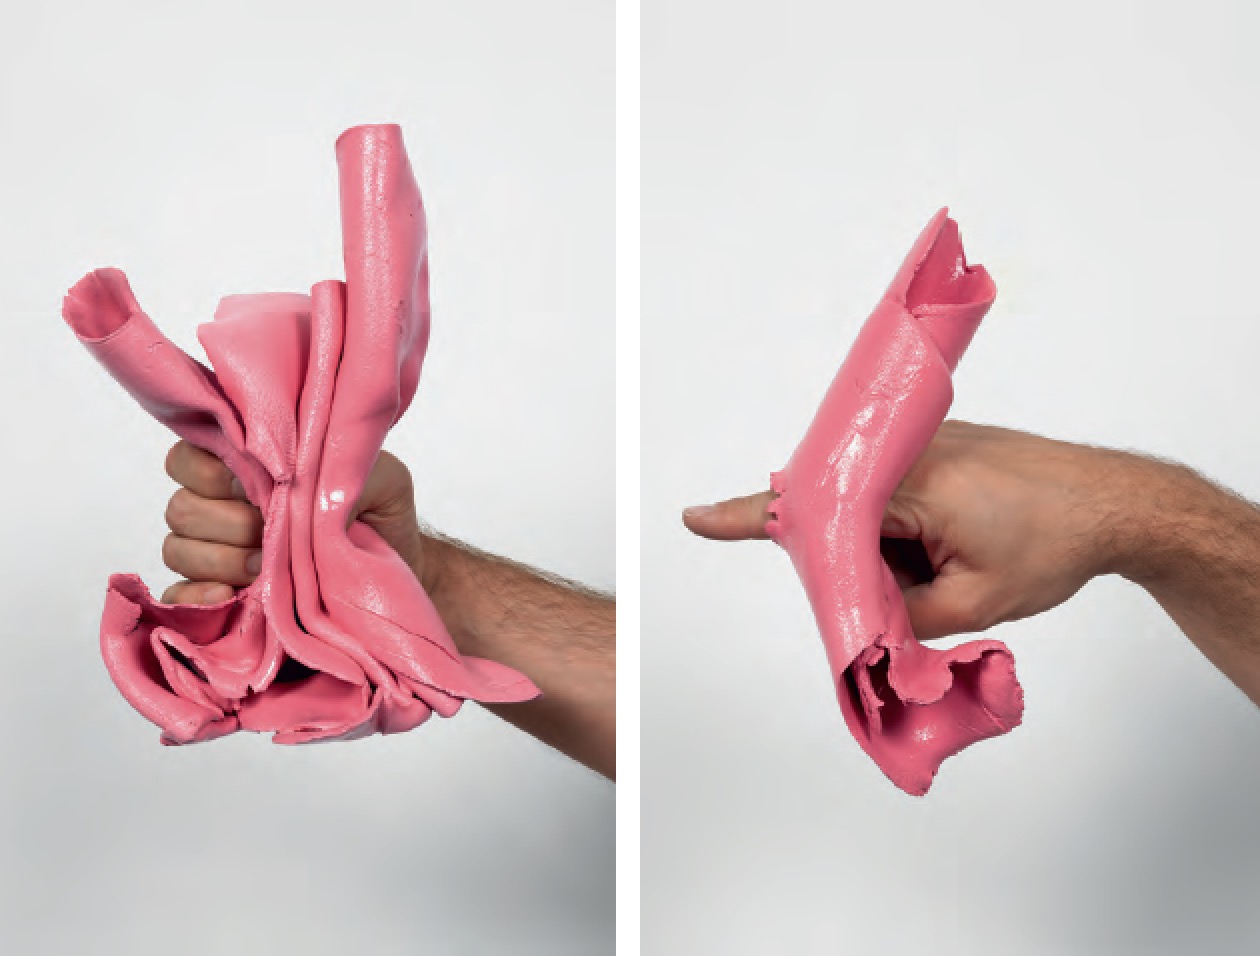 Untitled handheld sculpture I (pink), 2014 Ceramic, enamel – Marco Chiandetti and Untitled handheld sculpture II (pink), 2014 Ceramic, enamel – Marco Chiandetti 